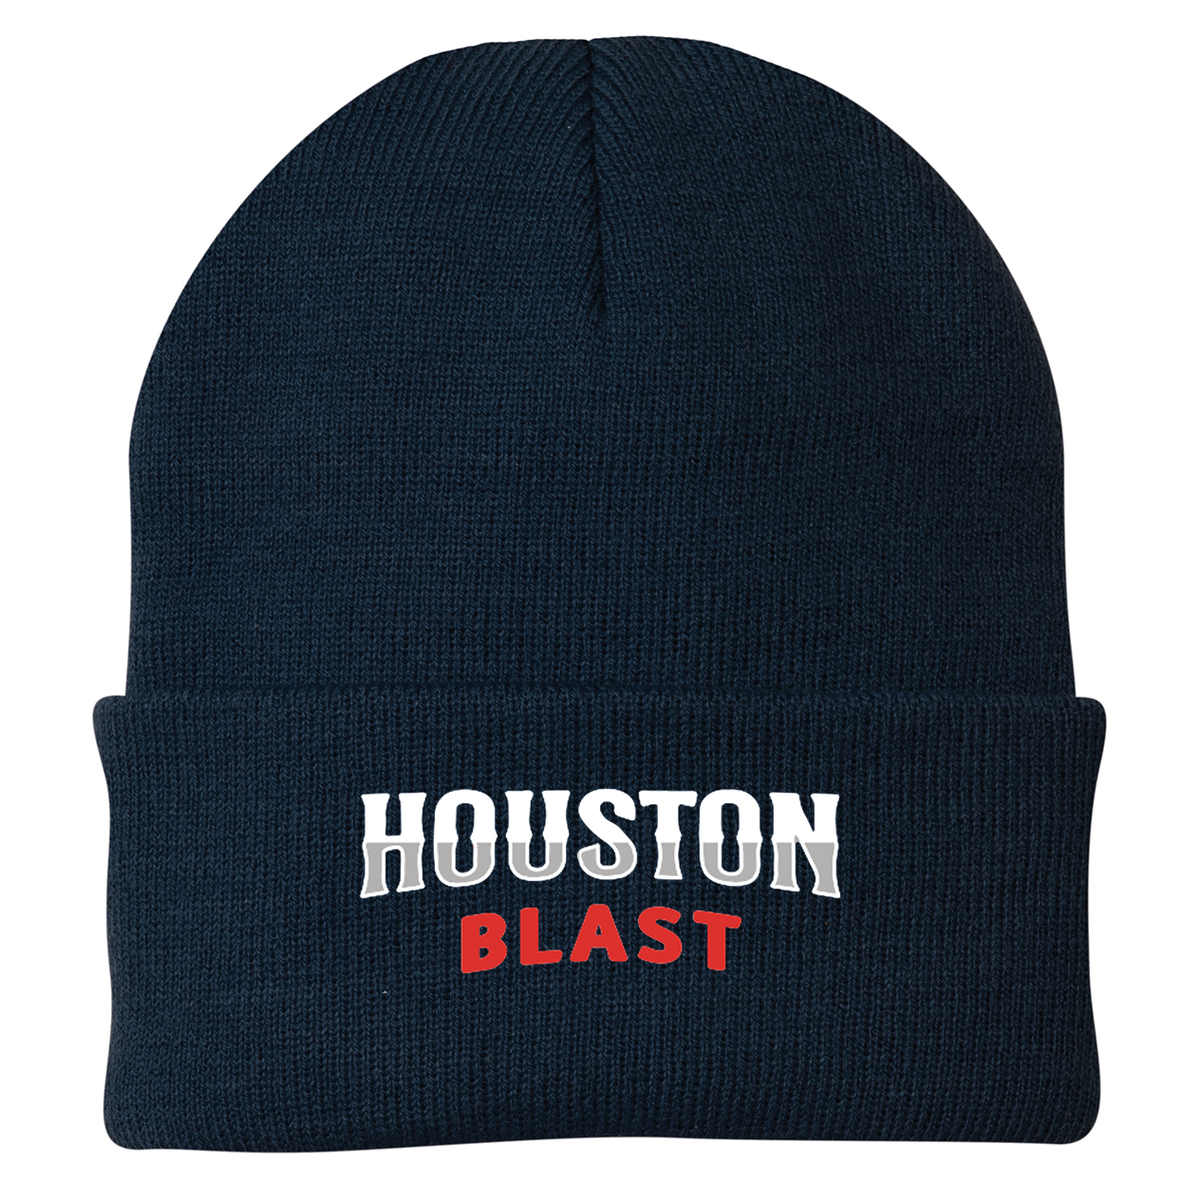 Houston Blast Baseball Knit Beanie